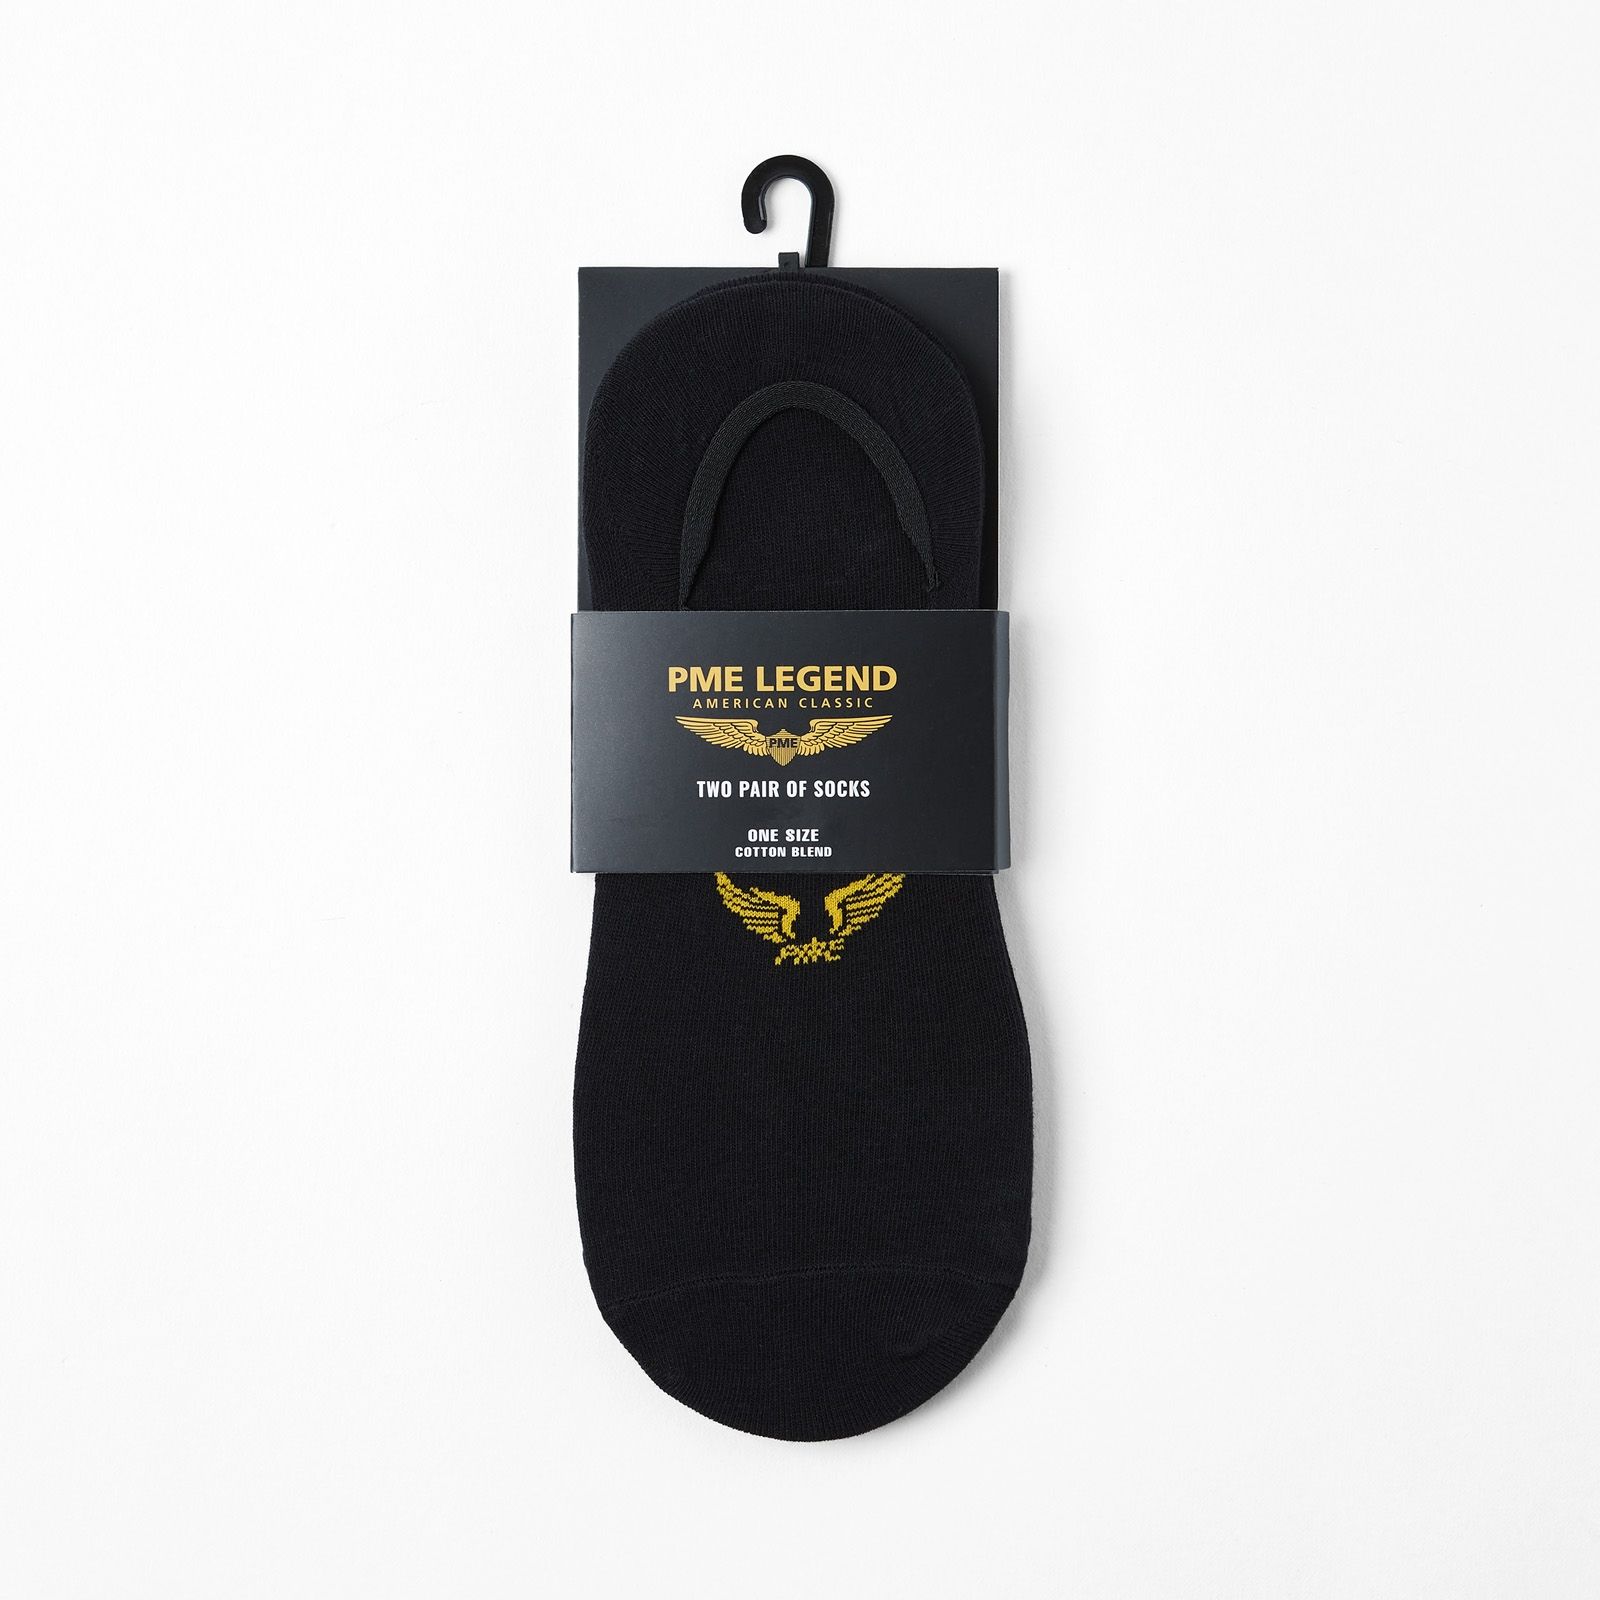 Pme Legend Socks Cotton blend socks 2-pack - Black Black 00095907-999